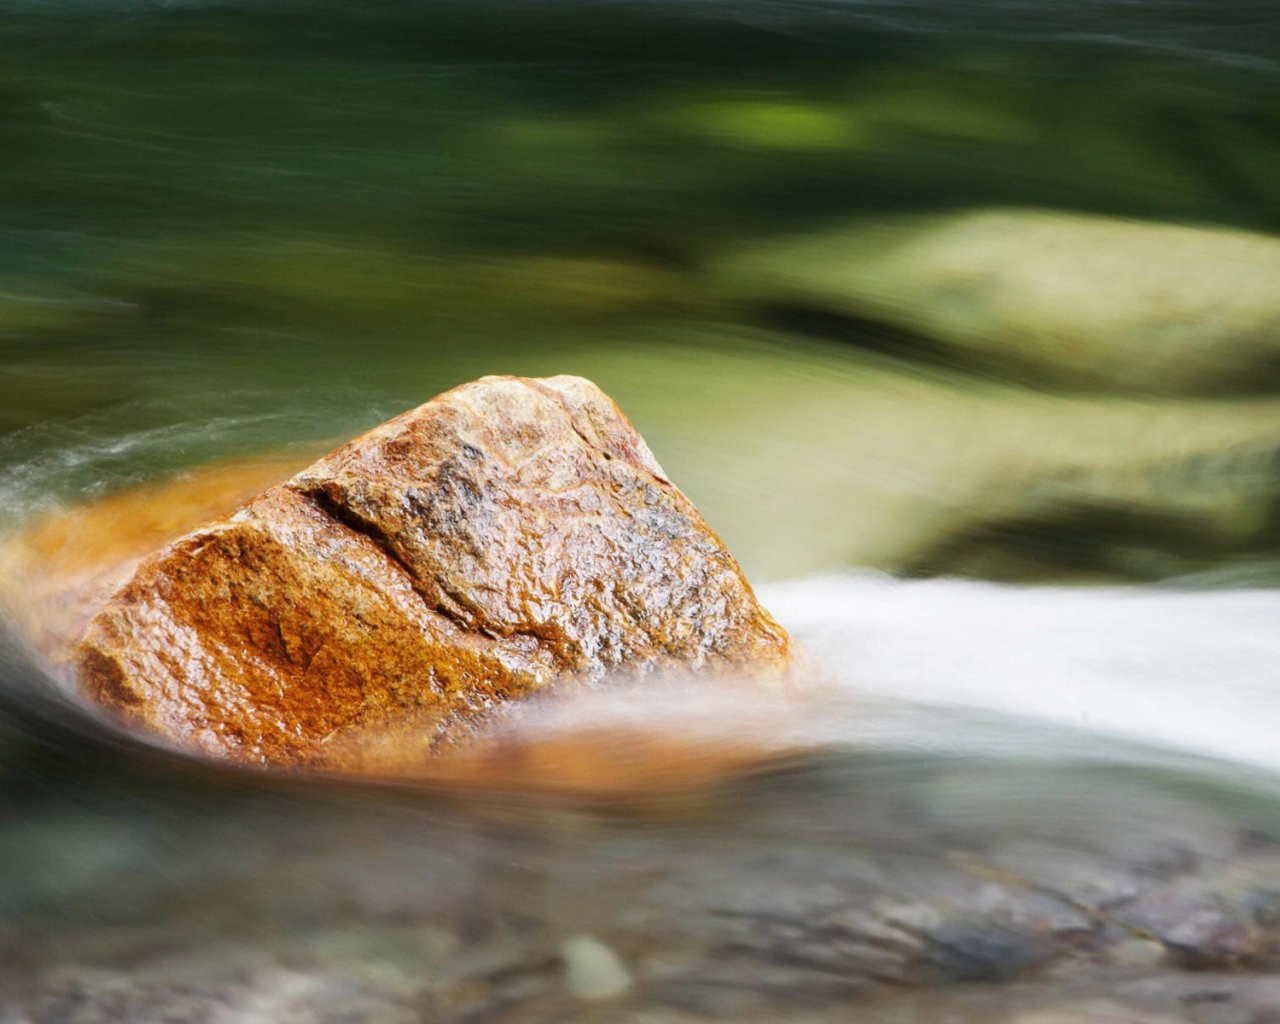 Камень и вода